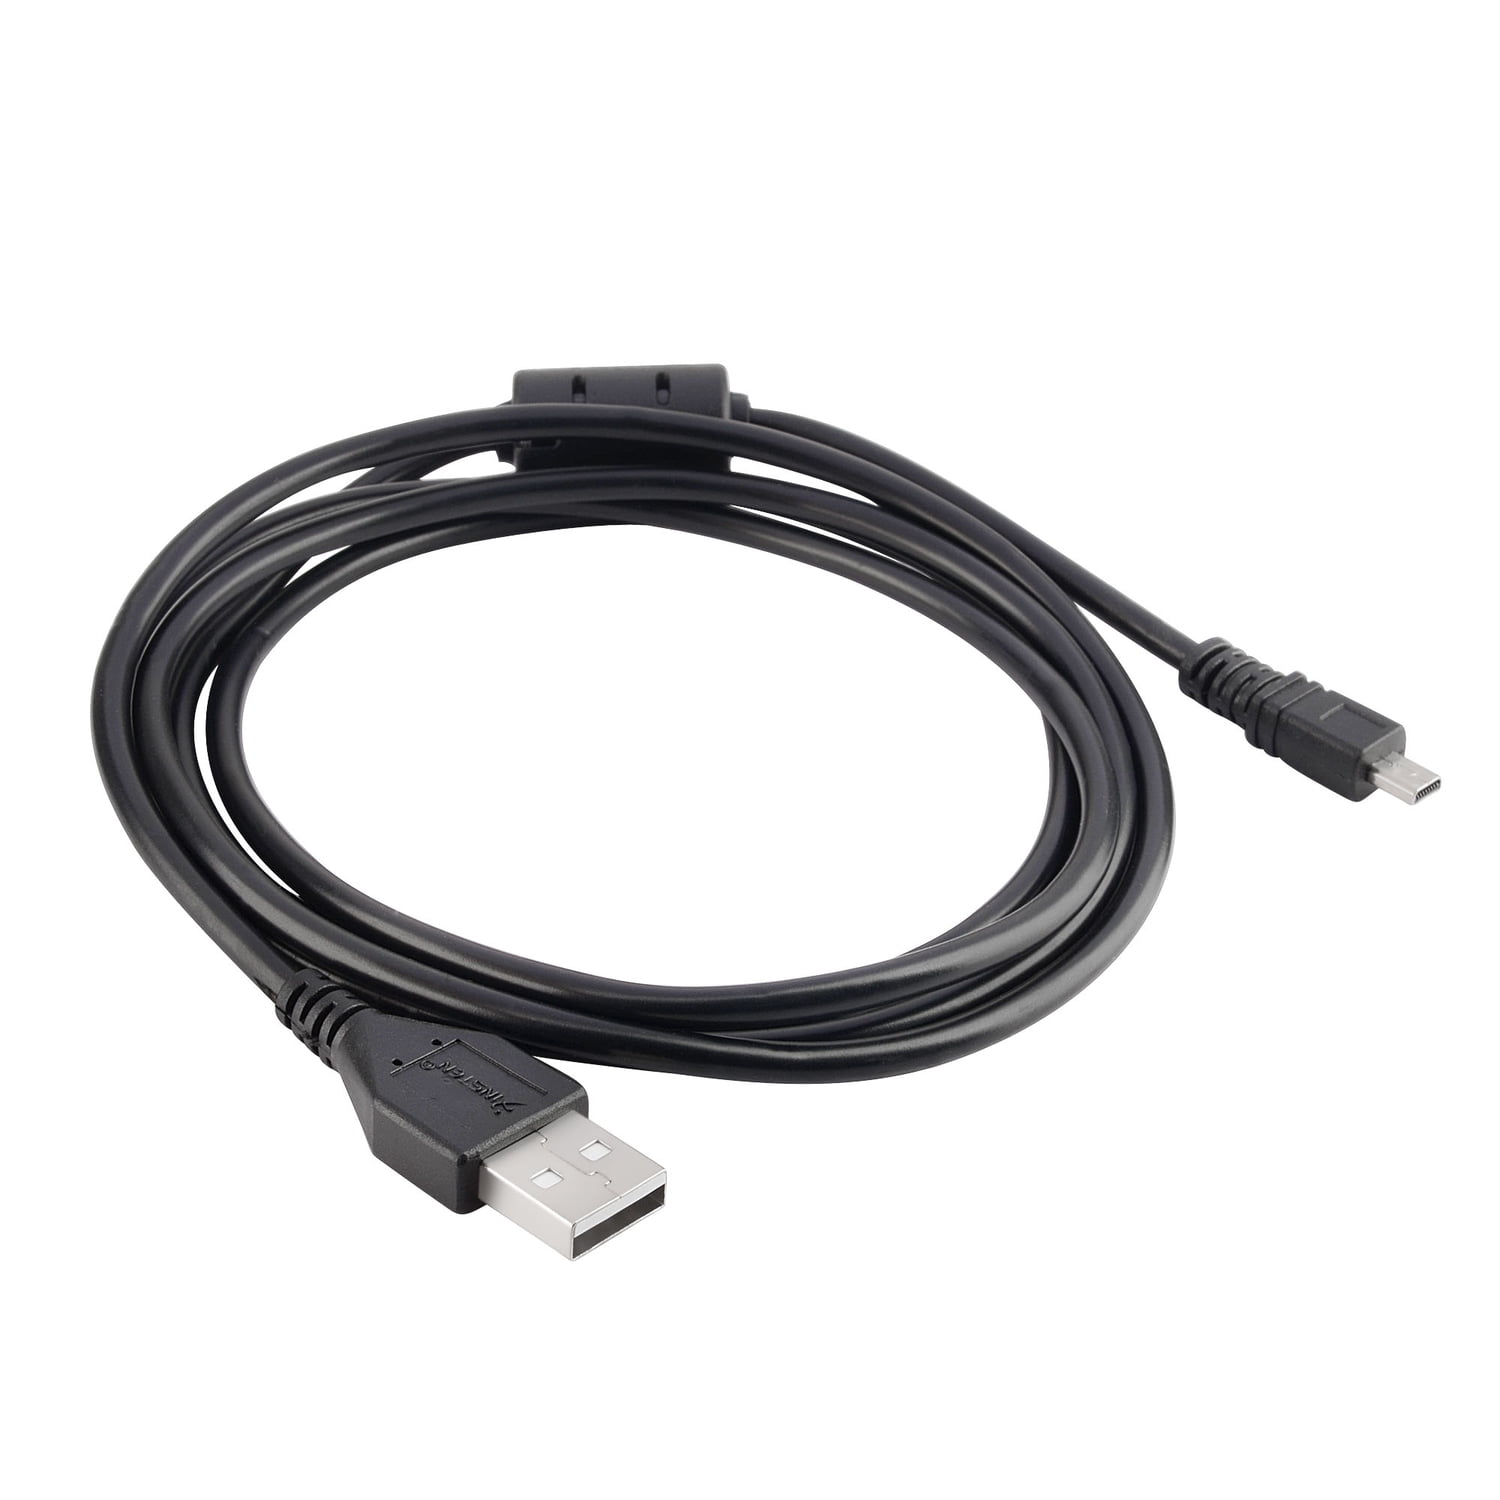 EpicDelaz 2 Pack Nikon UC-E6 USB Data Cable For Coolpix 4600 7900 8800 L19  L20 L100 L110 S70 S520 S620 S230 S220 P50 D5000 S6000 - Walmart.com